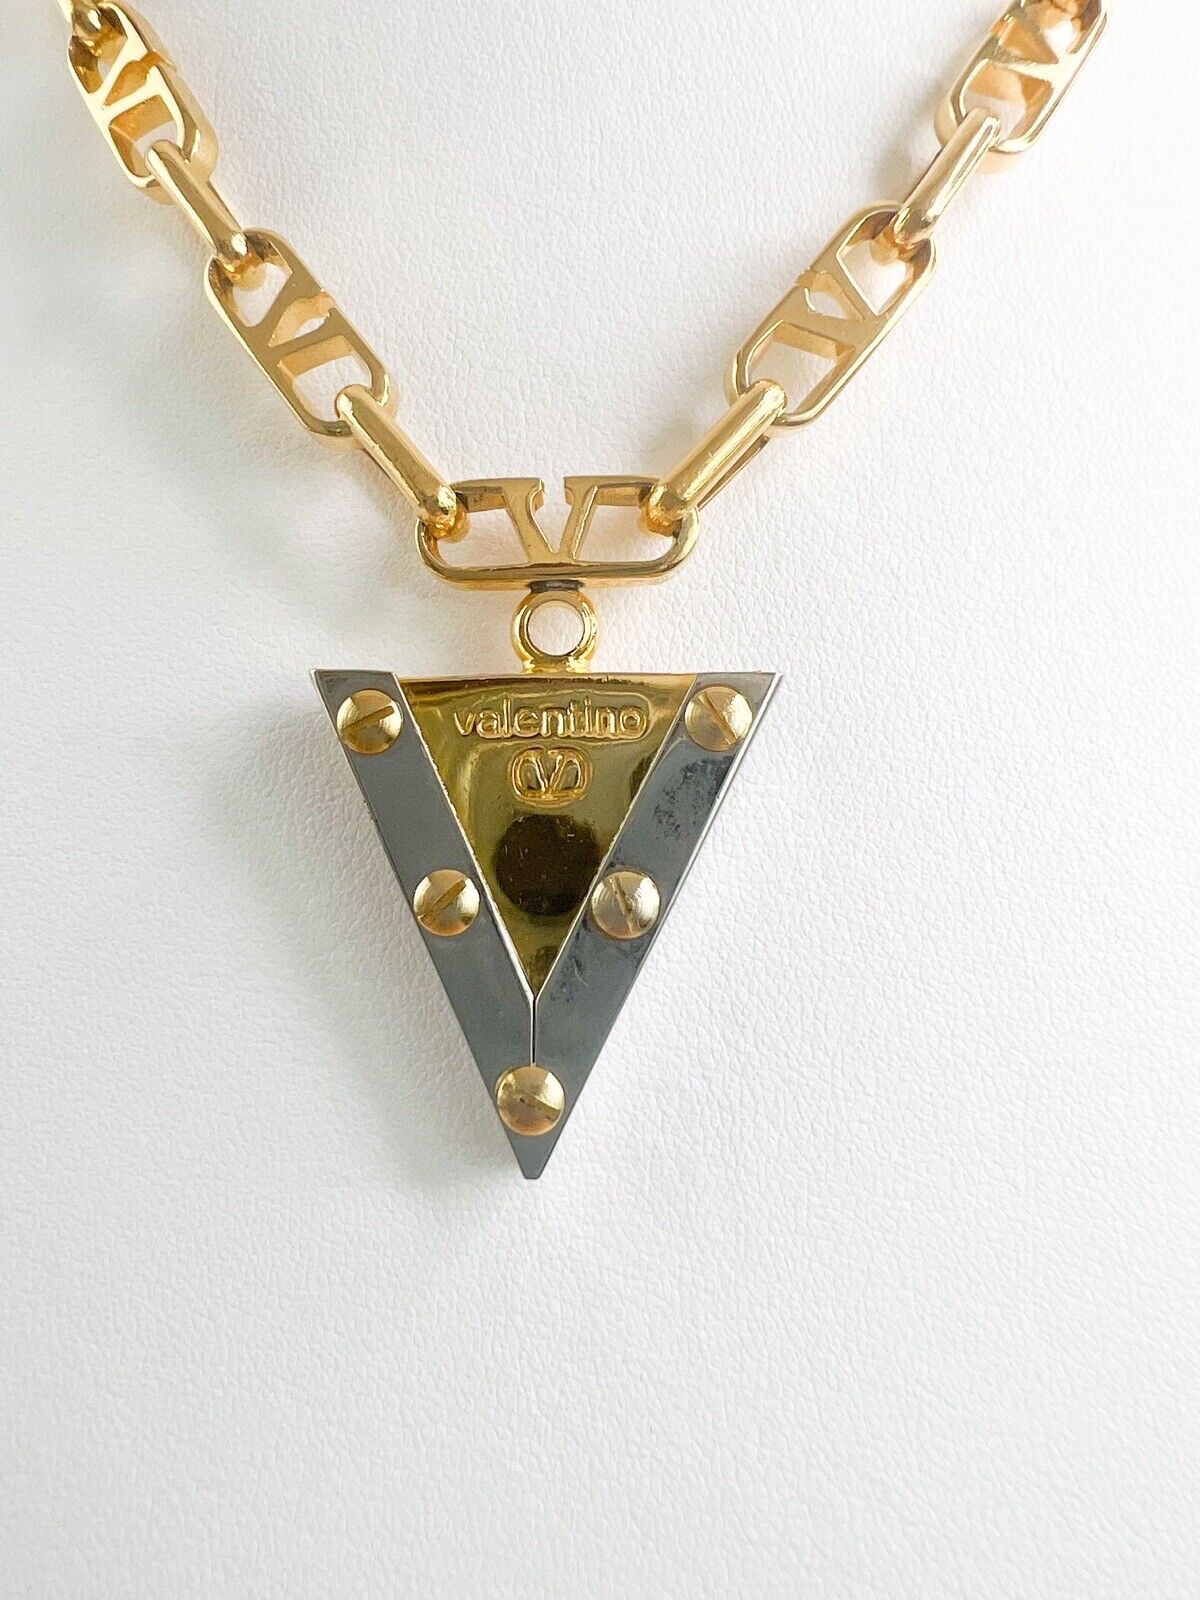 【SOLD OUT】Valentino Garavani Vintage Choker Necklace V logo Gold Tone Gorgeous